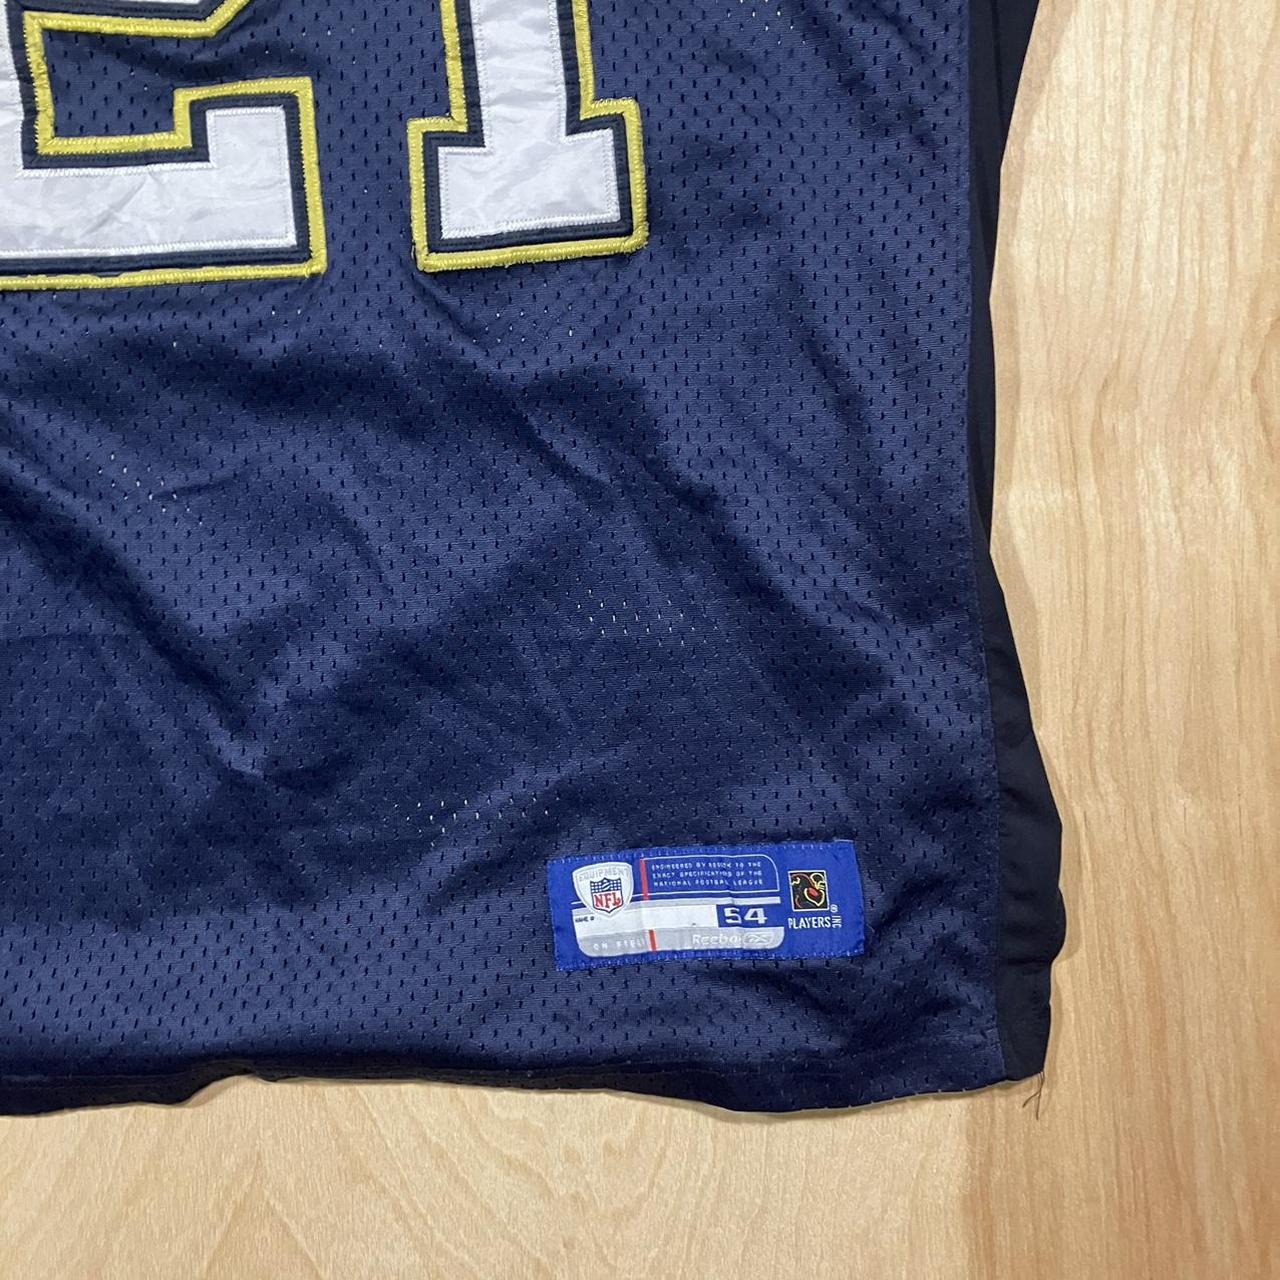 ladainian tomlinson stitched jersey